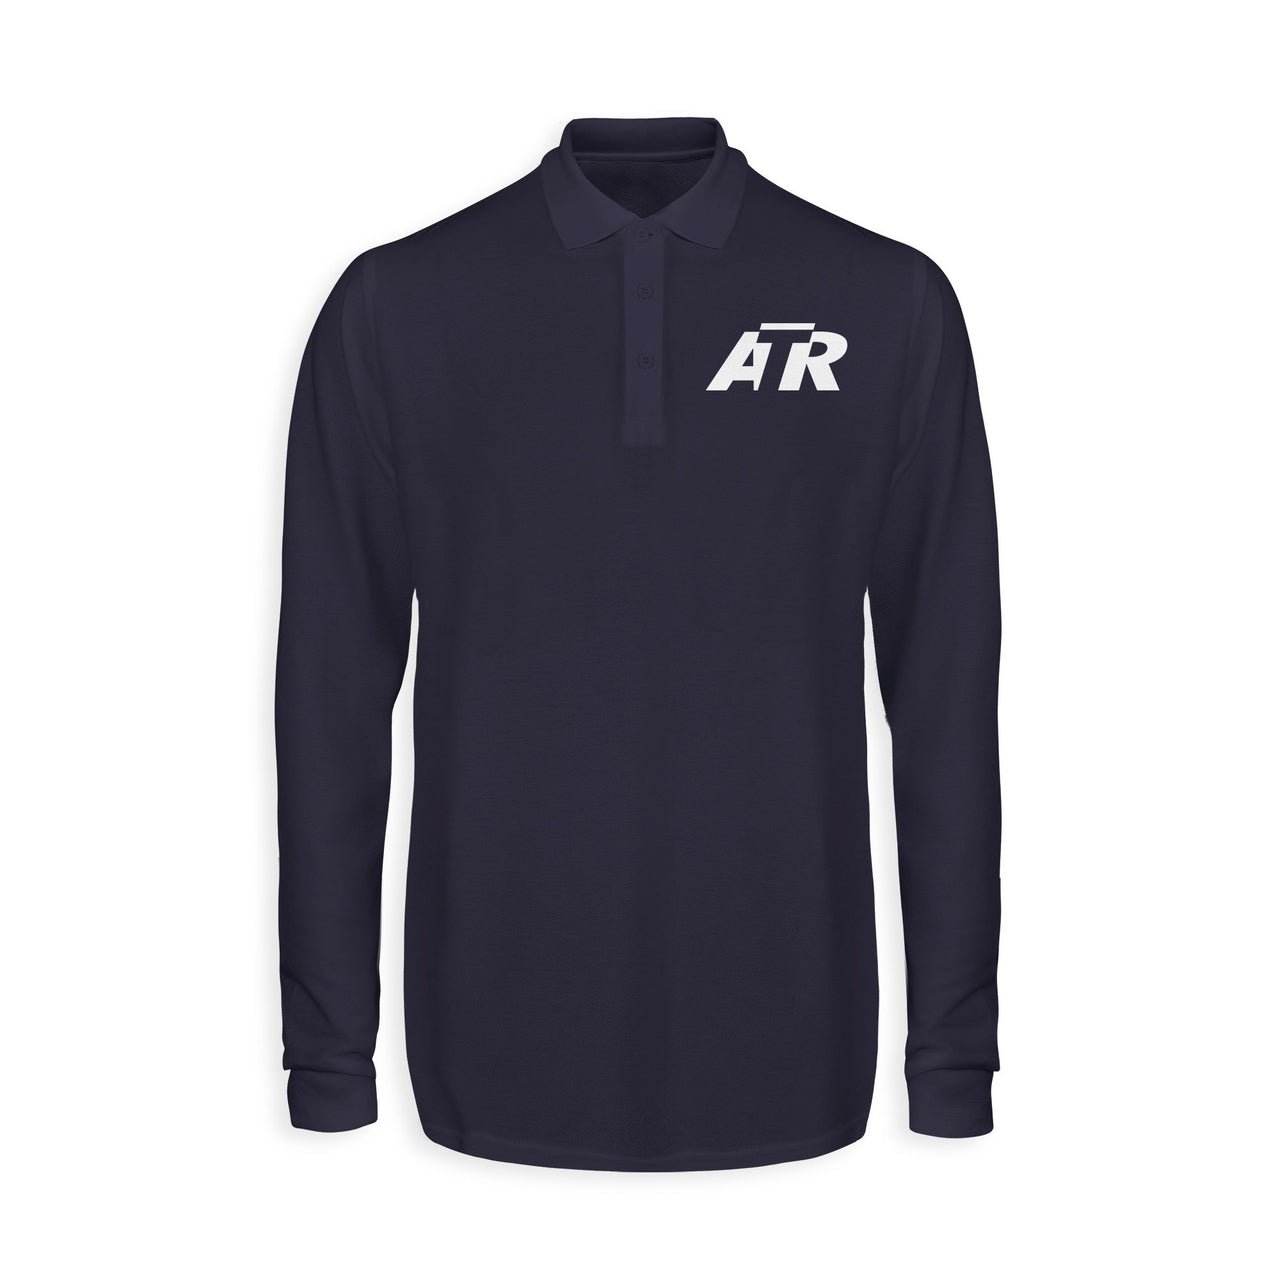 ATR & Text Designed Long Sleeve Polo T-Shirts